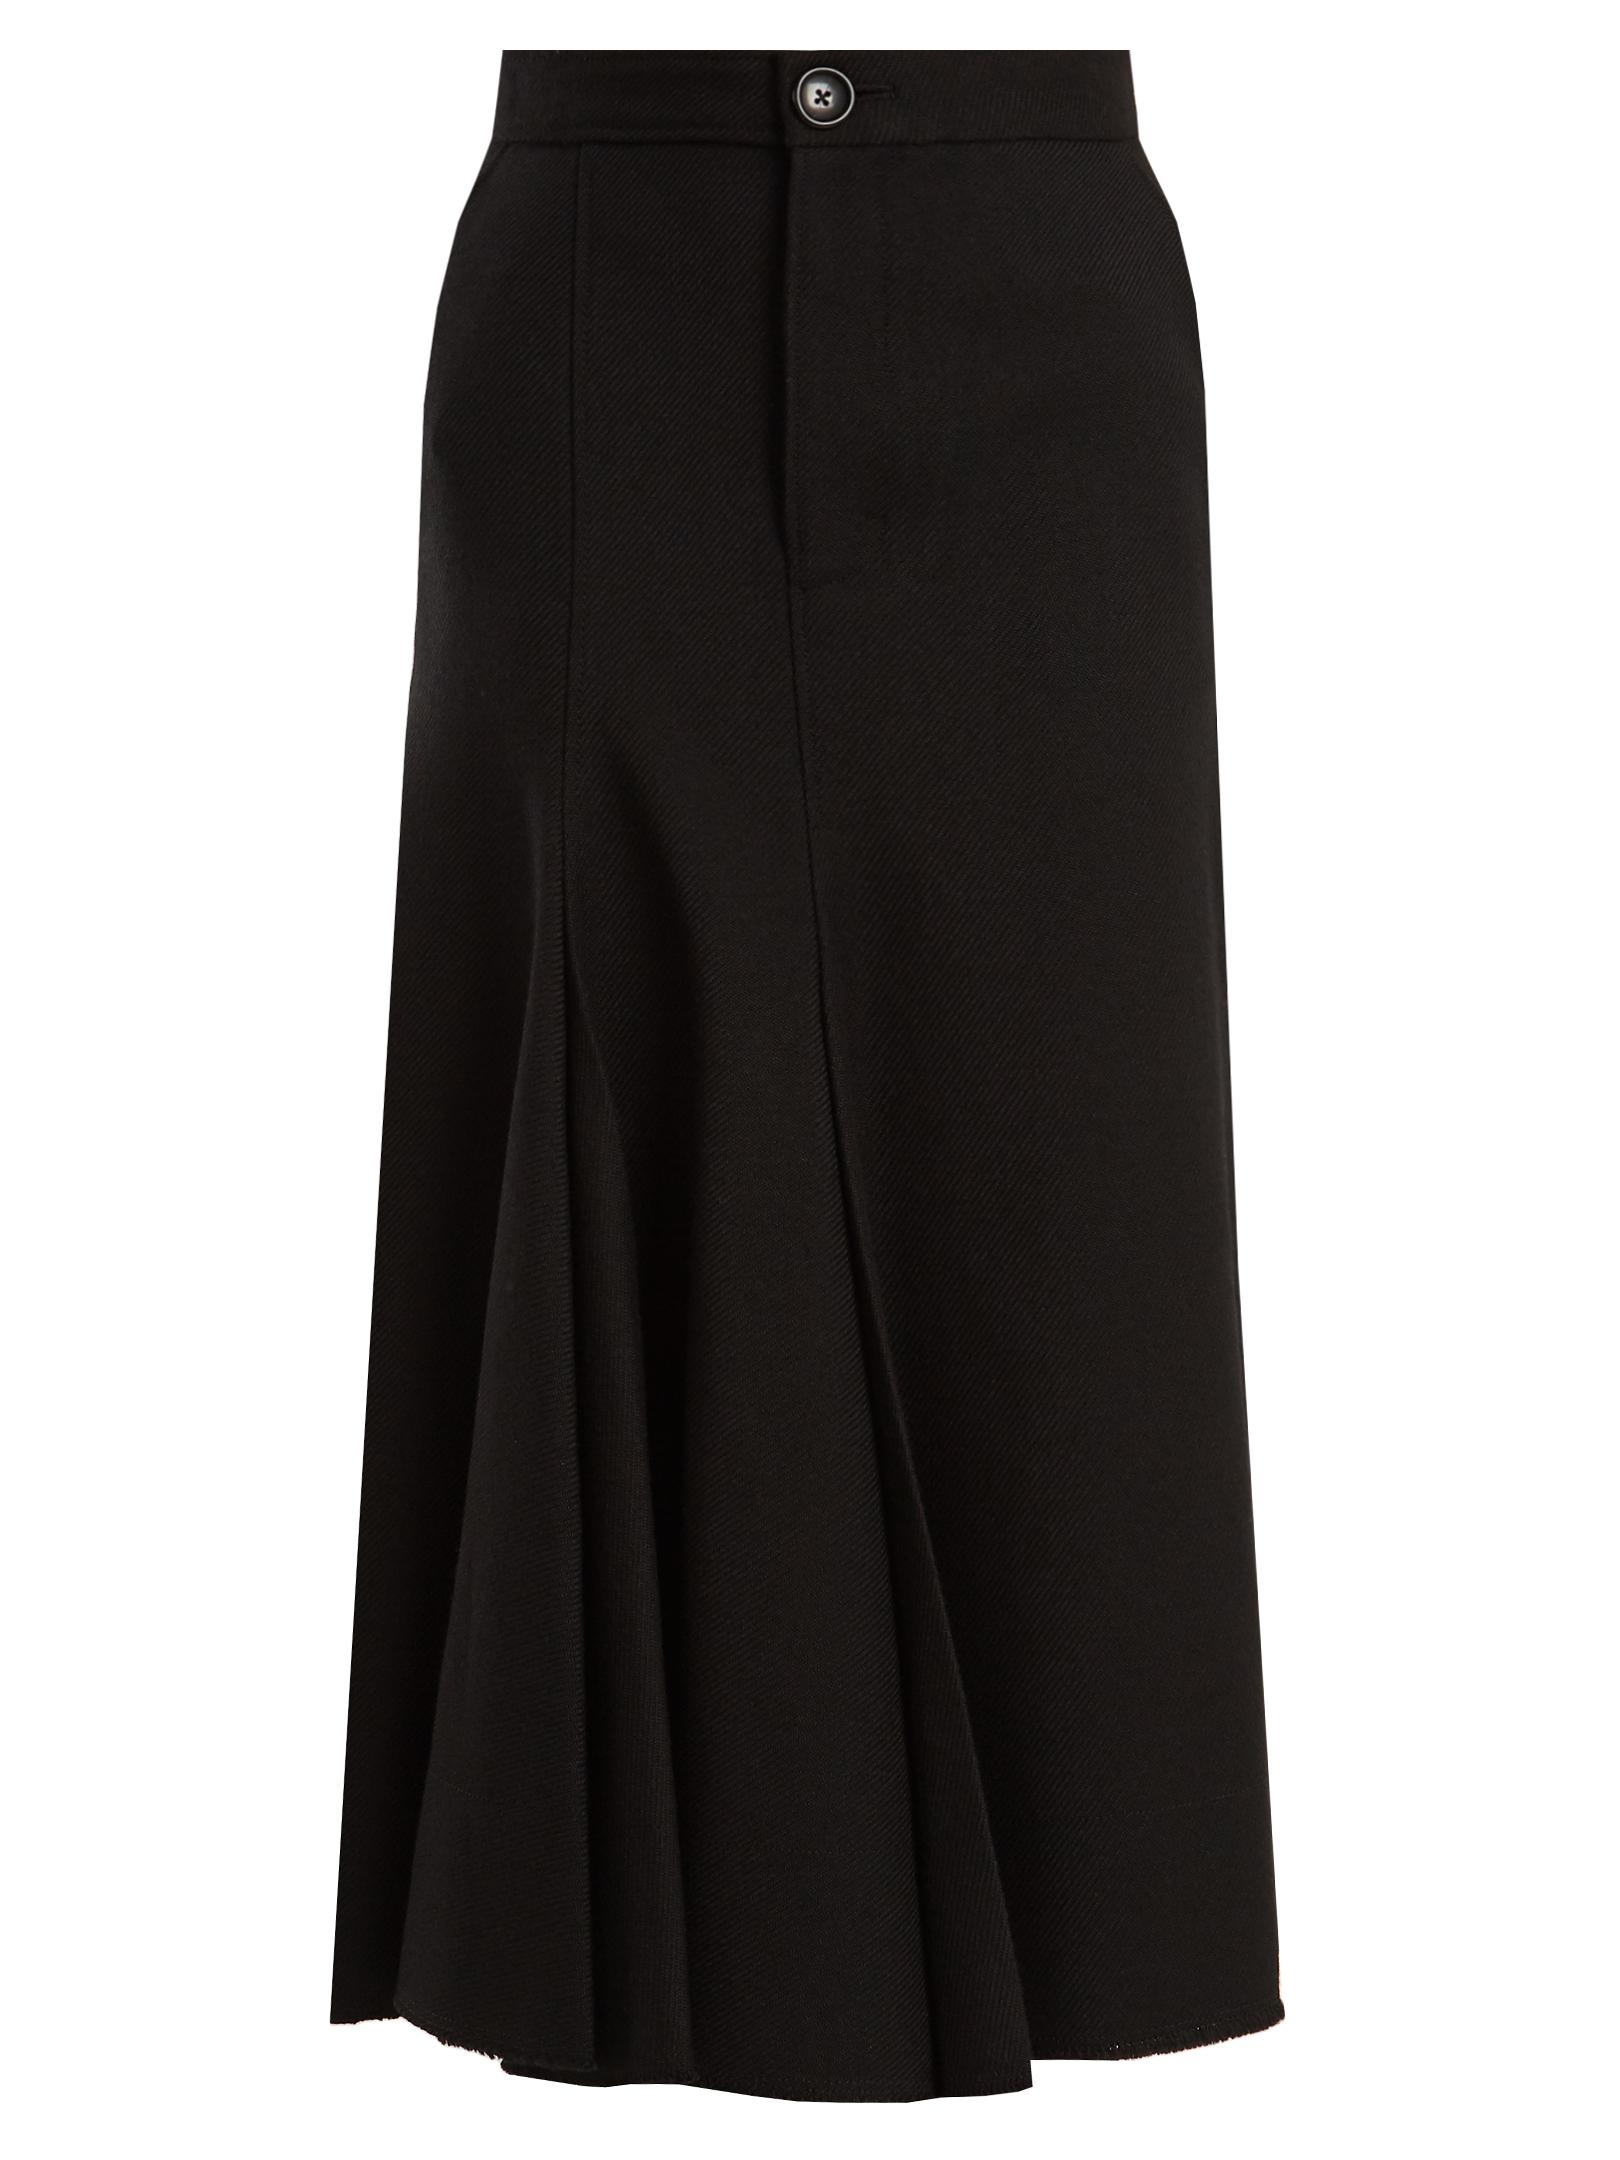 JOSEPH Laurel Asymmetric Wool Midi Skirt in Black - Lyst